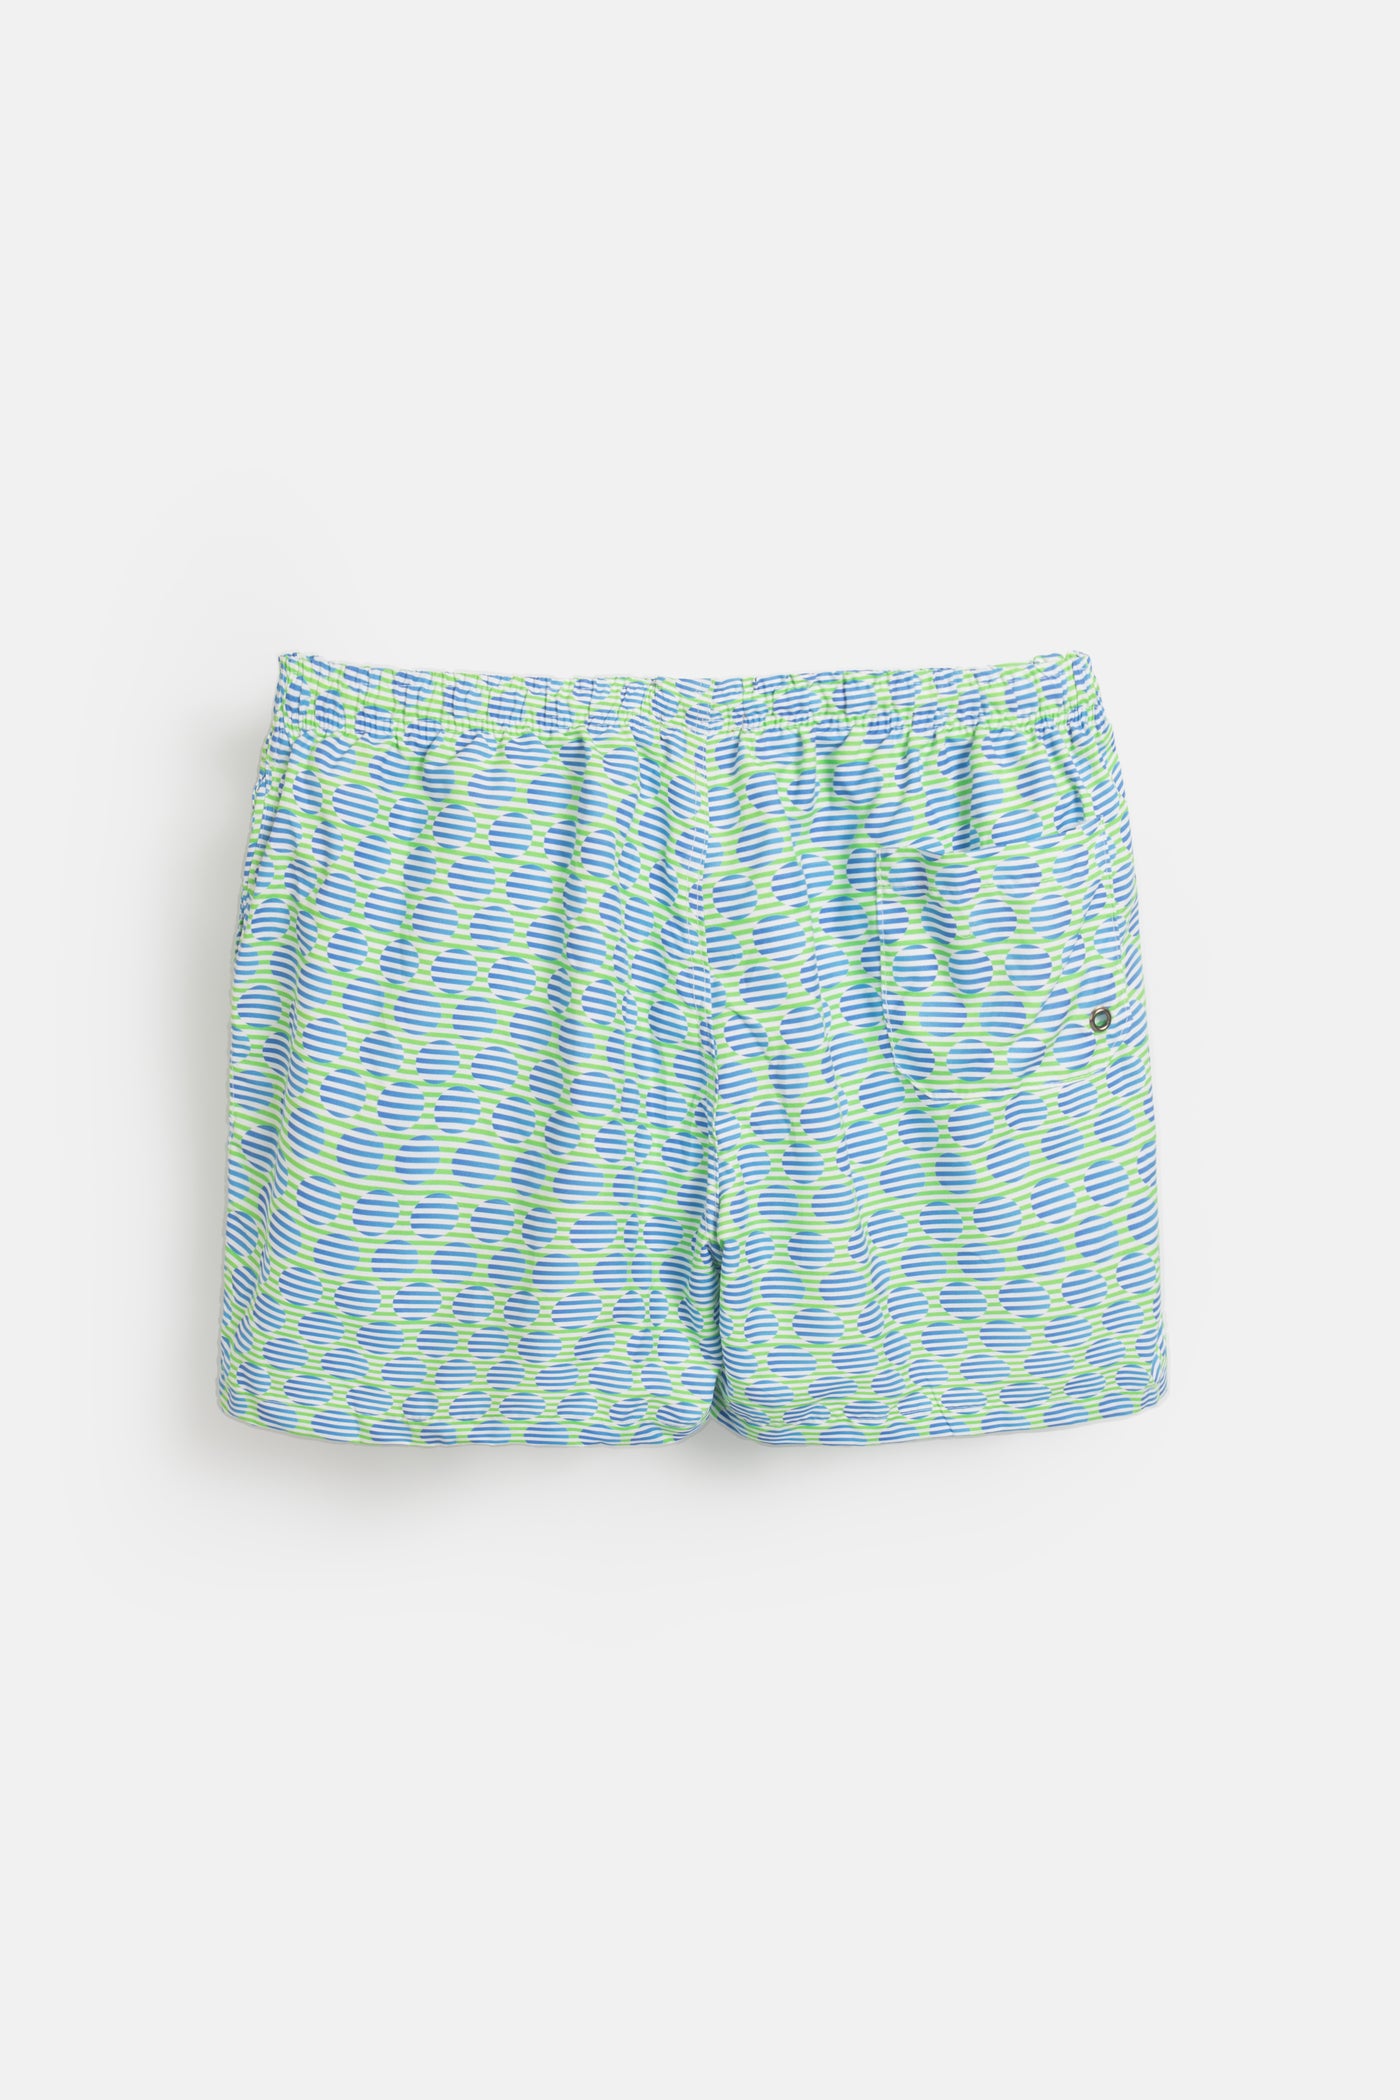 Printed Light Green & Blue Swimwear